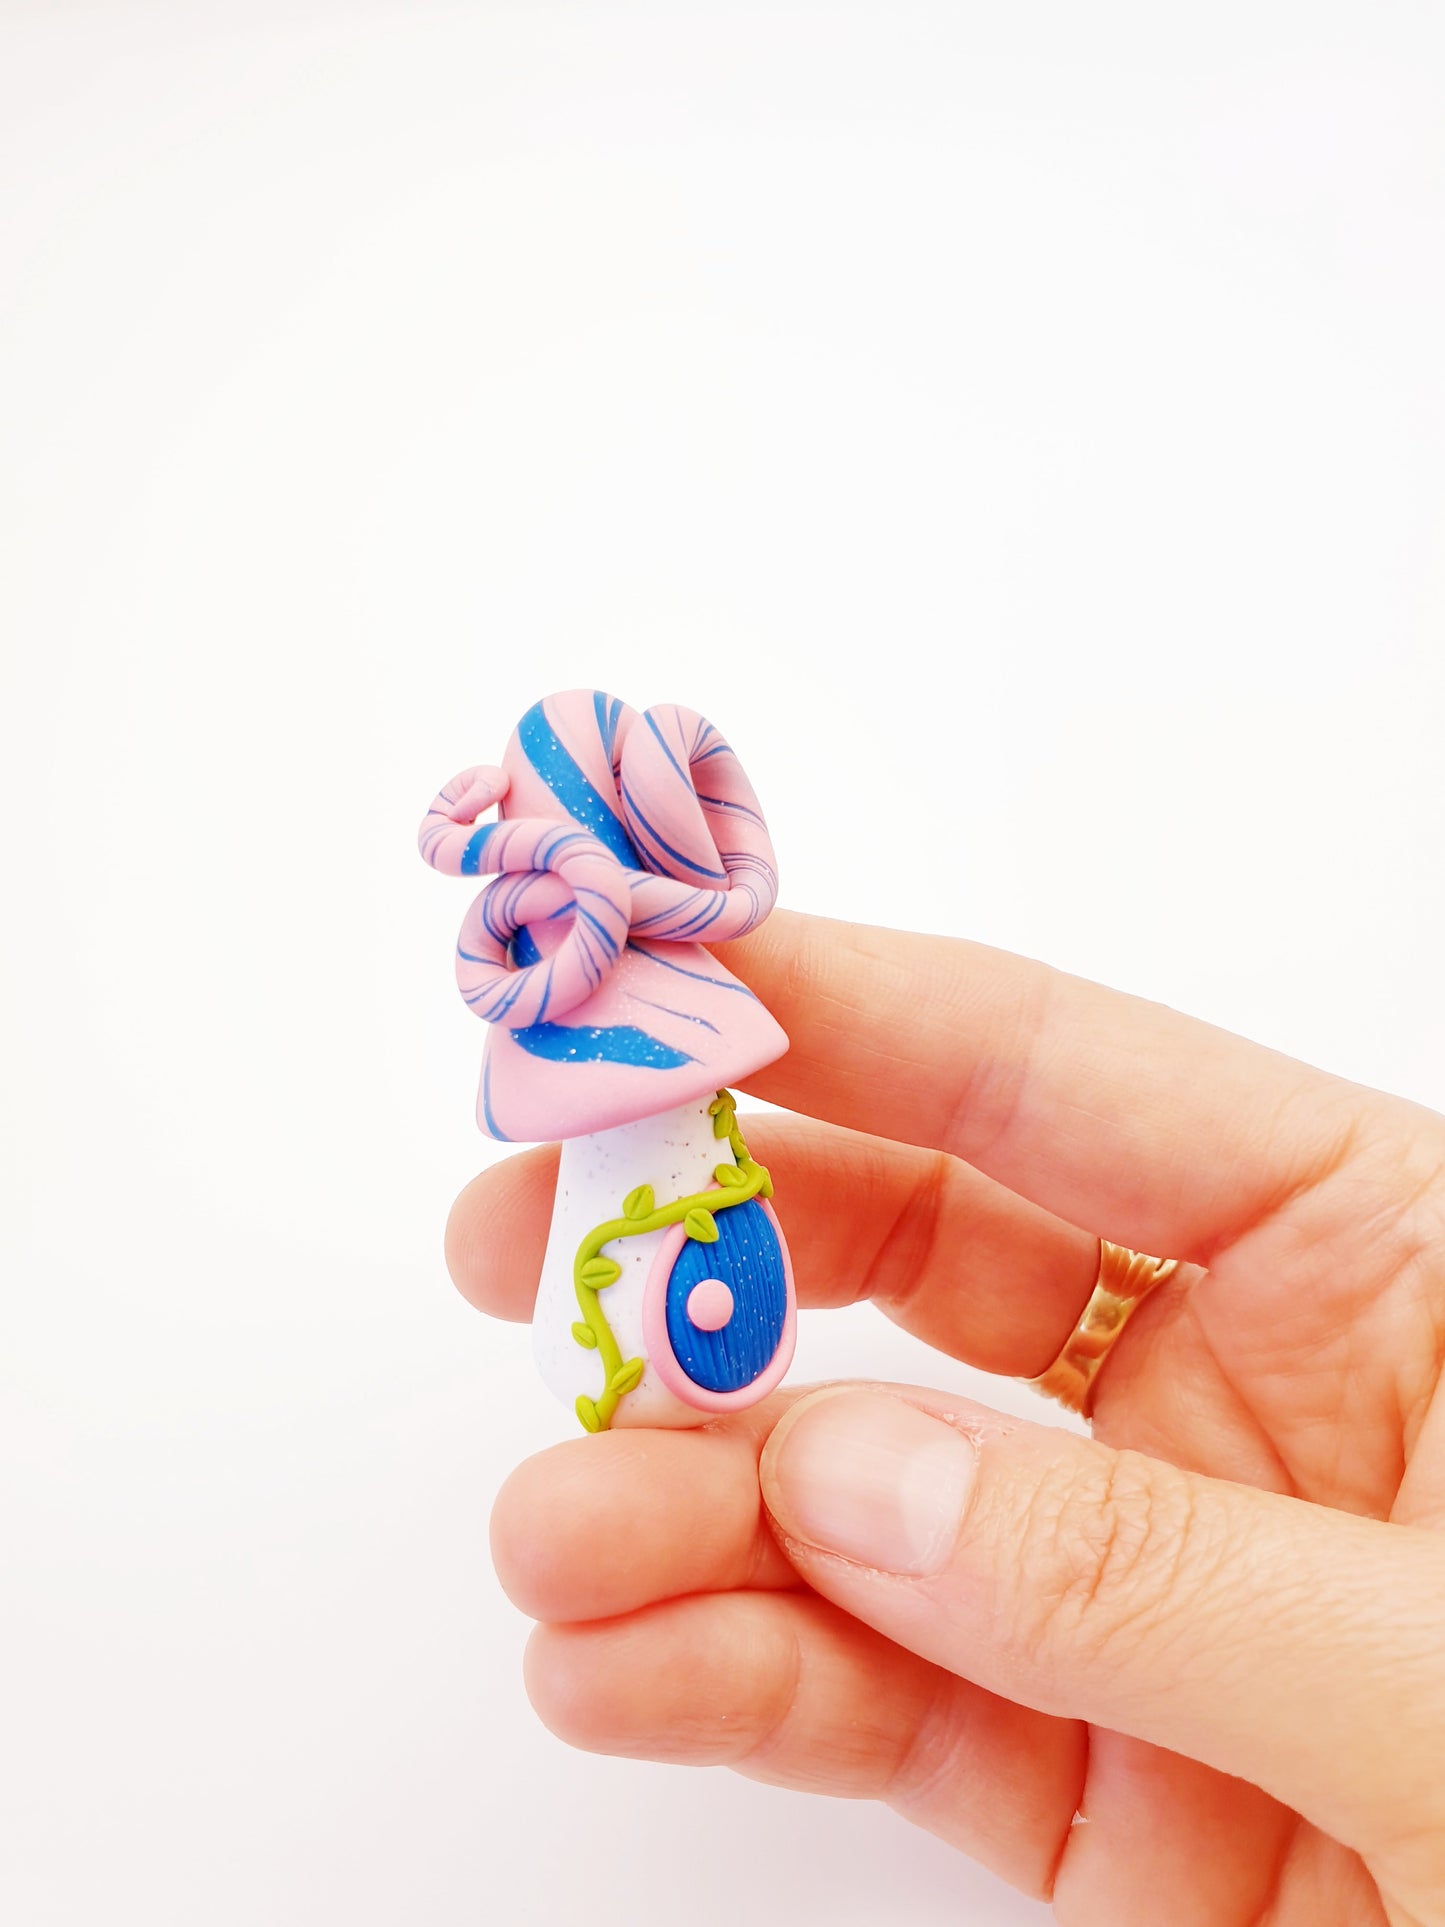 Miniature garden kit - pink & blue swirls